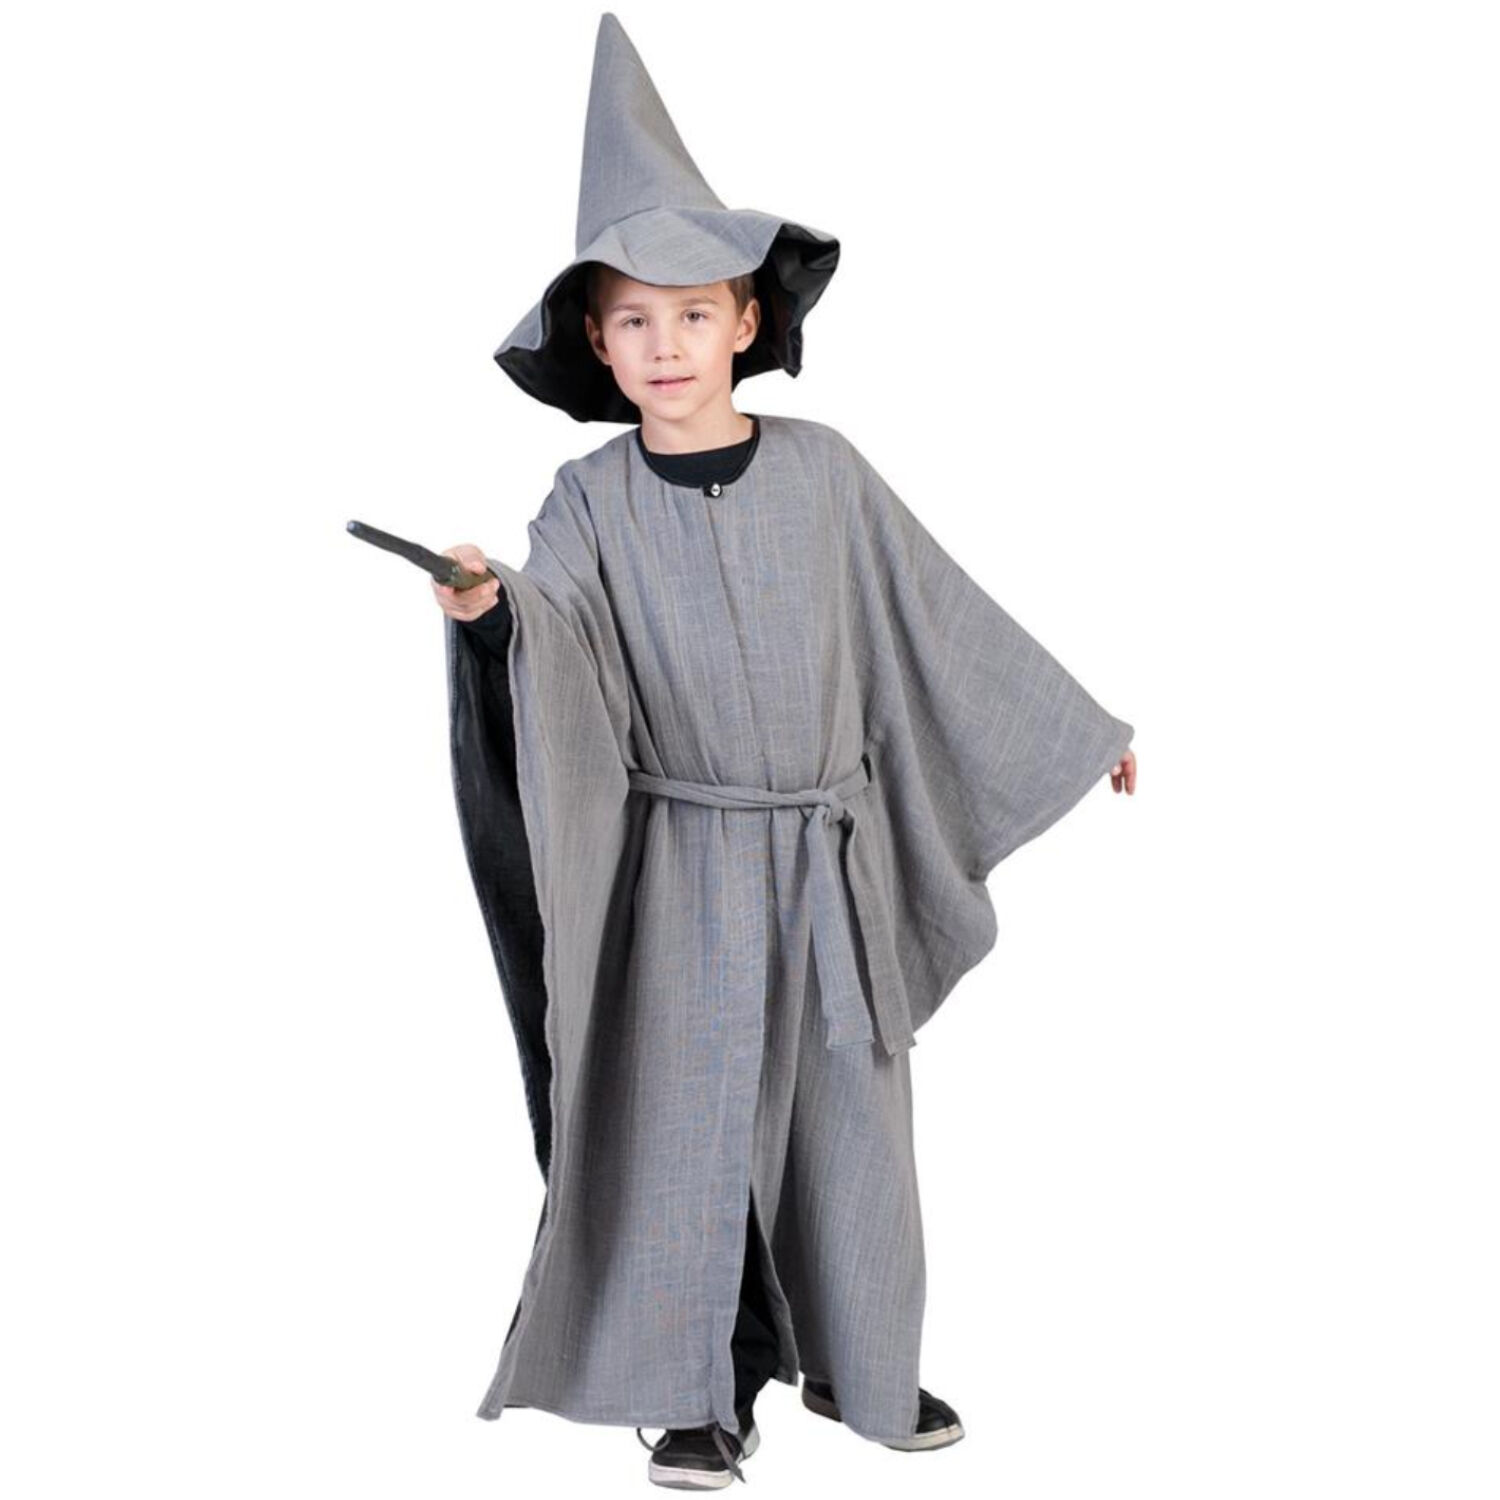 NEU Kinder-Kostüm Zauberer-Mantel grau, mit Hut und Gürtel, Gr. 104-116